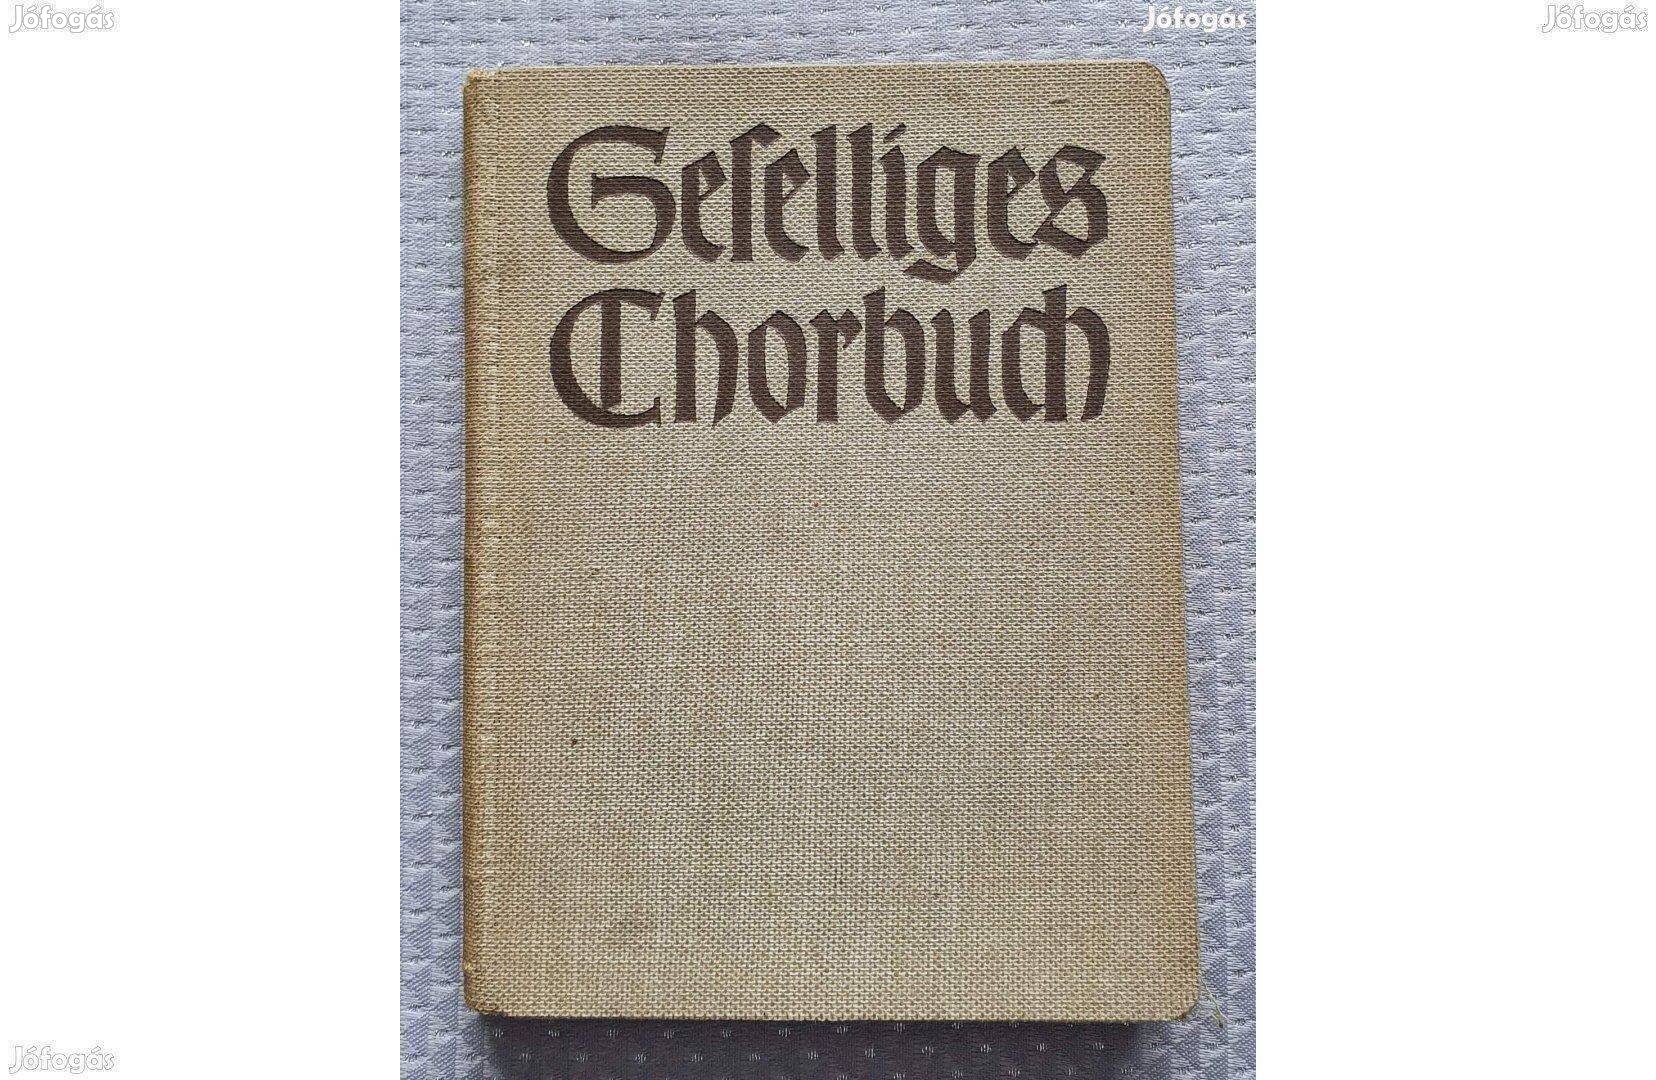 Geselliges Chorbuch német nyelvű kóruskönyv, kotta 1938